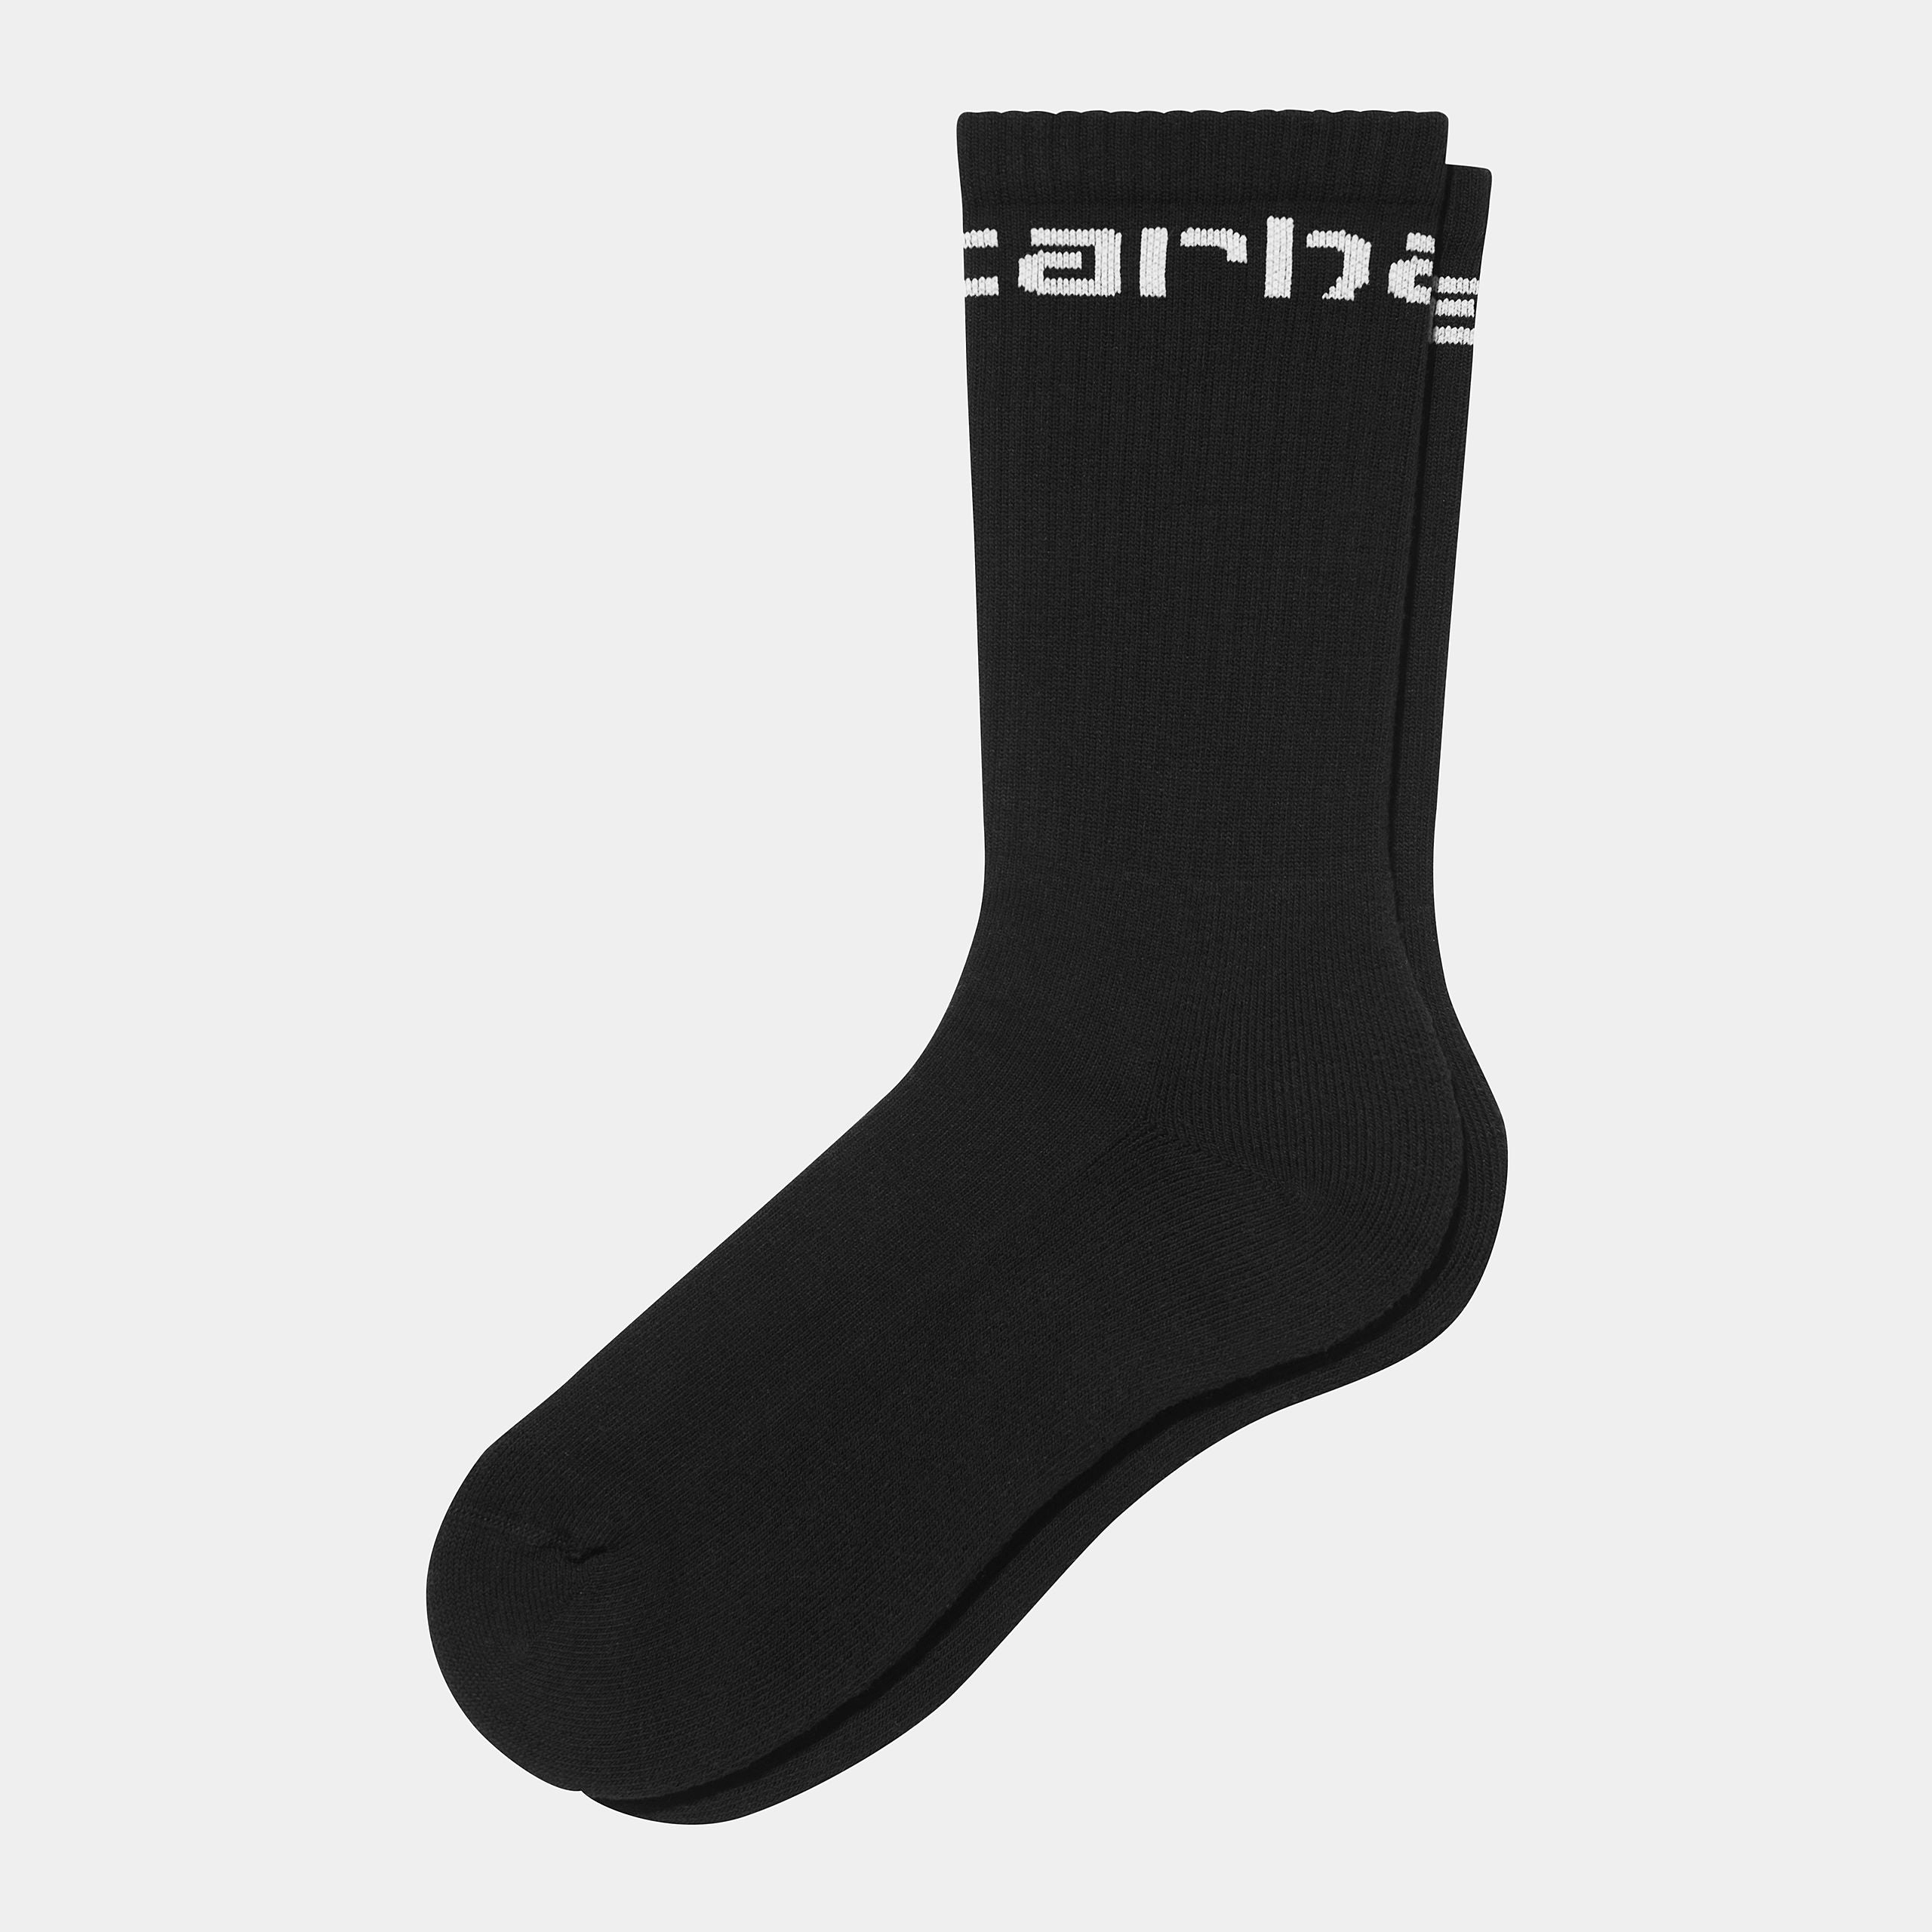 Carhartt Mens Carhartt Socks - Black / White - The Foot Factory